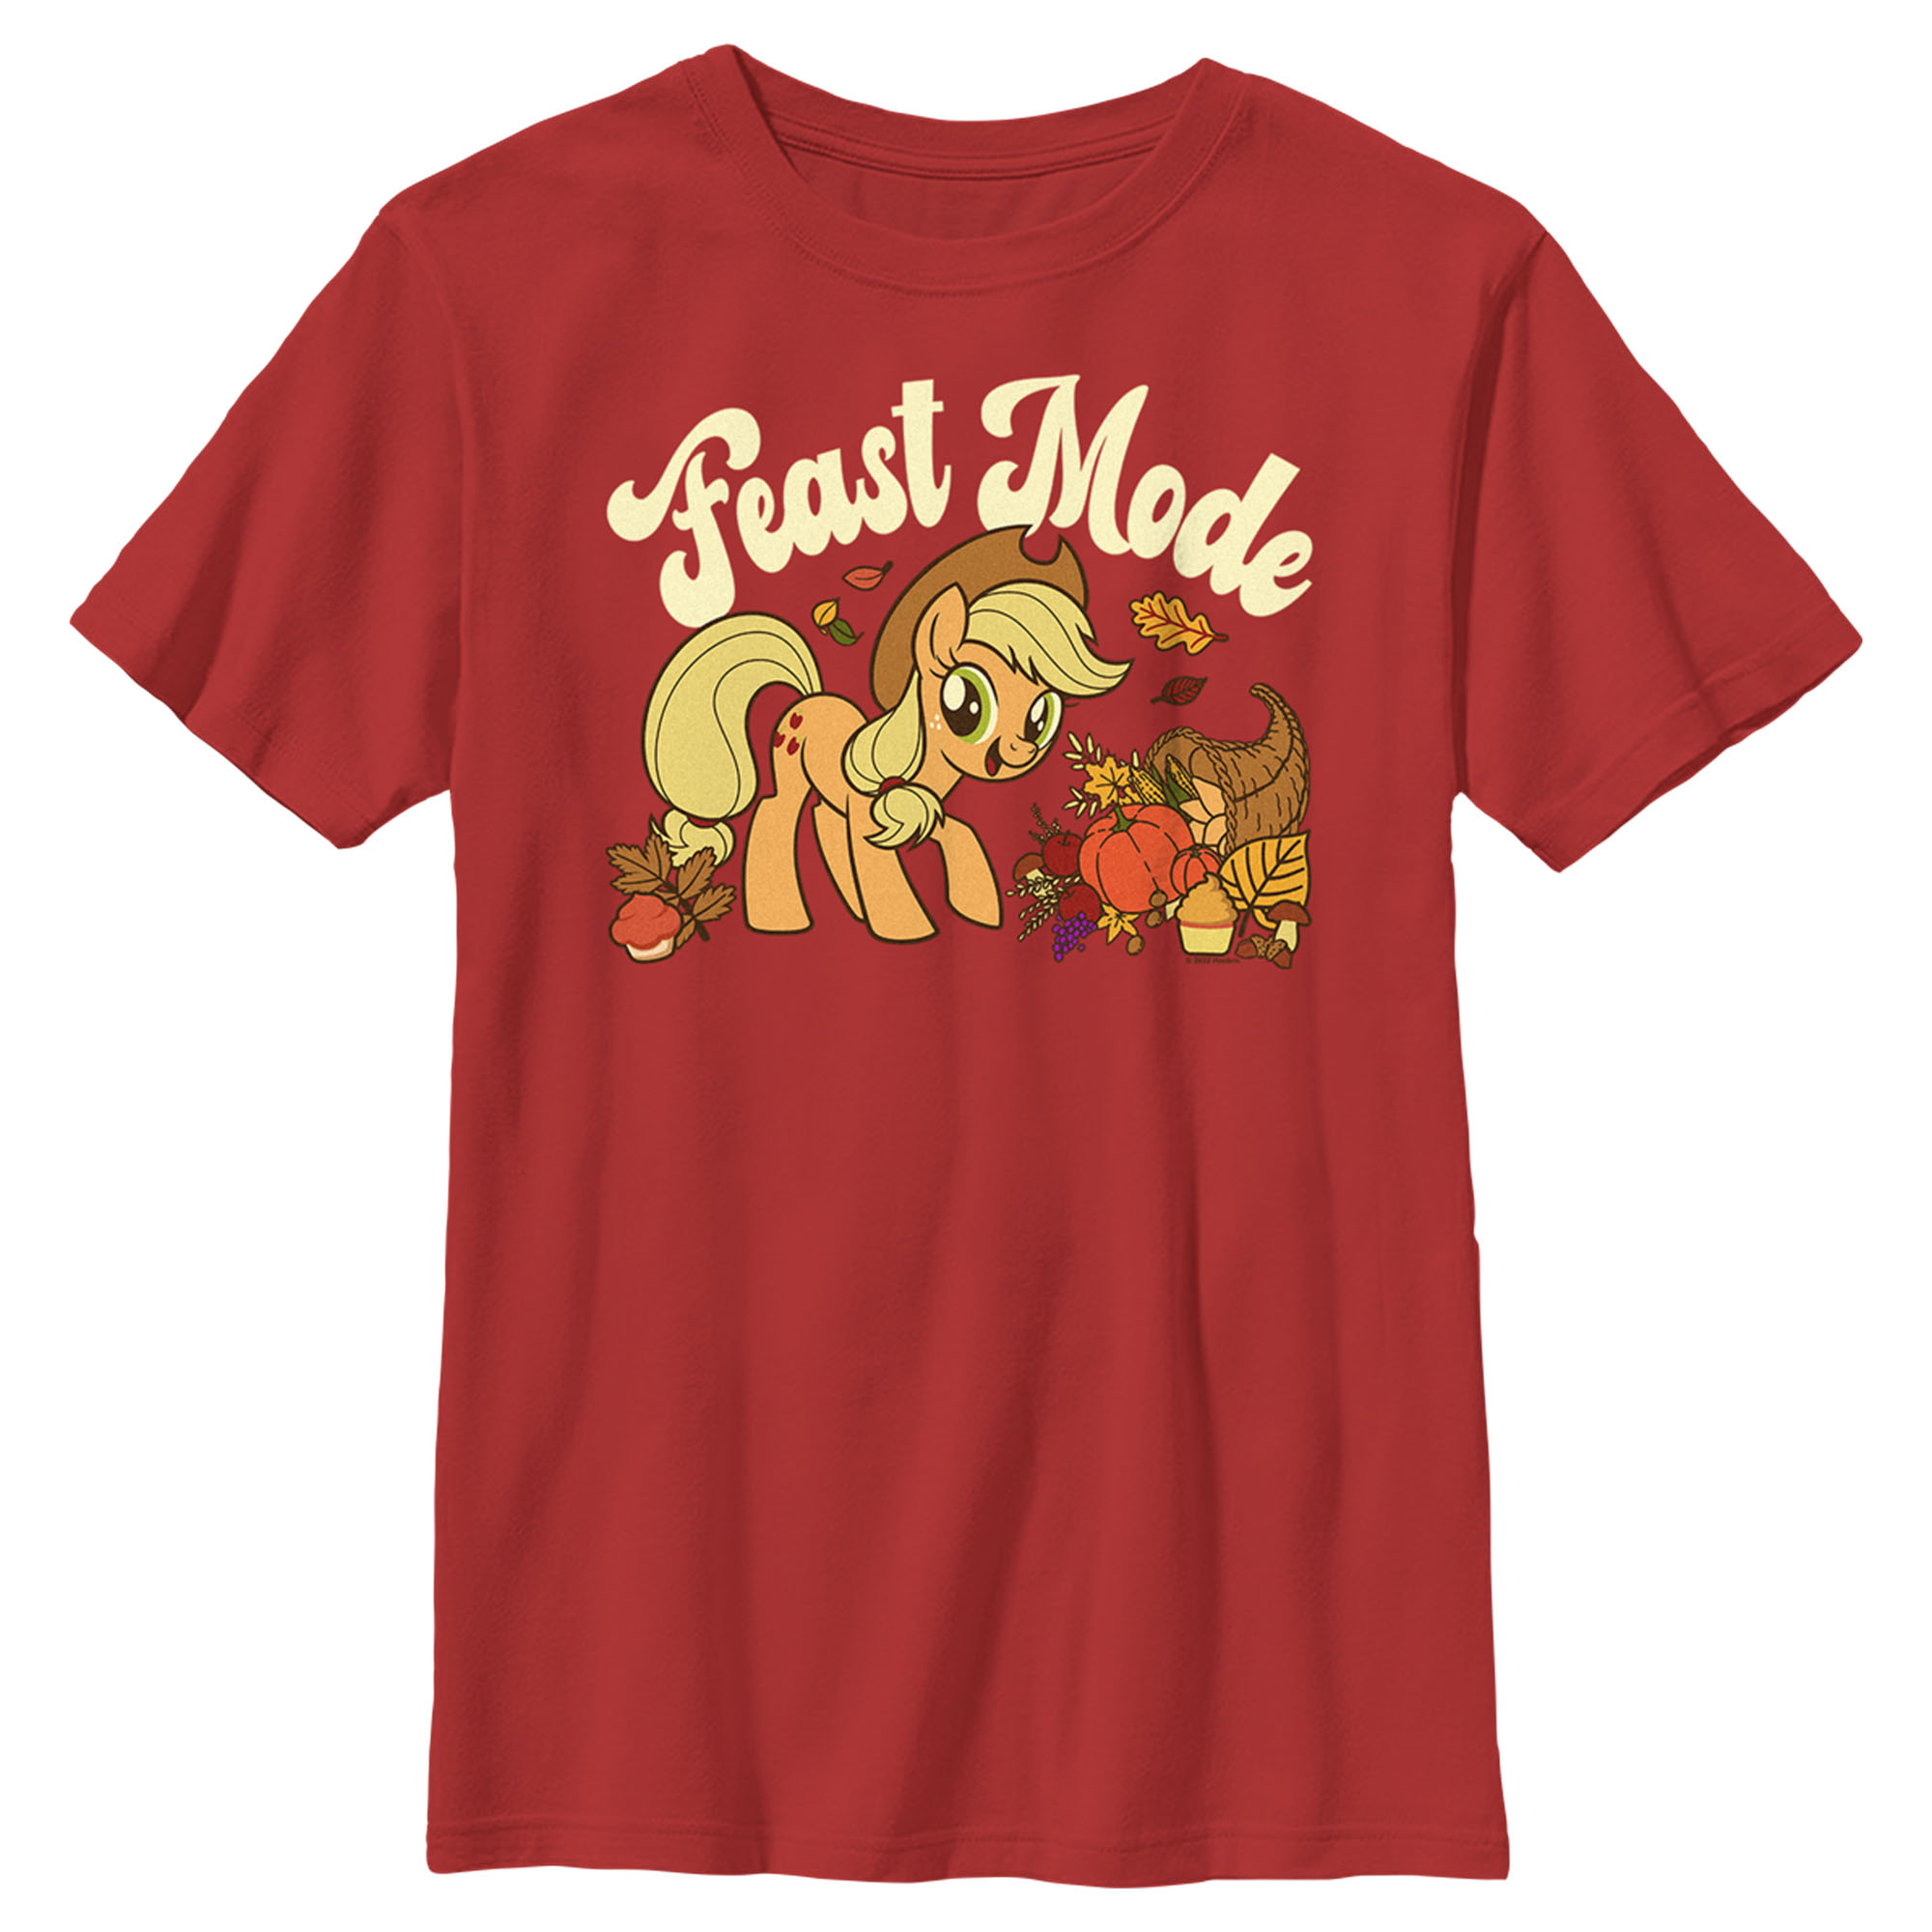 My Little Pony: Friendship is Magic Boy's My Little Pony: Friendship is Magic Applejack Feast Mode  Graphic T-Shirt